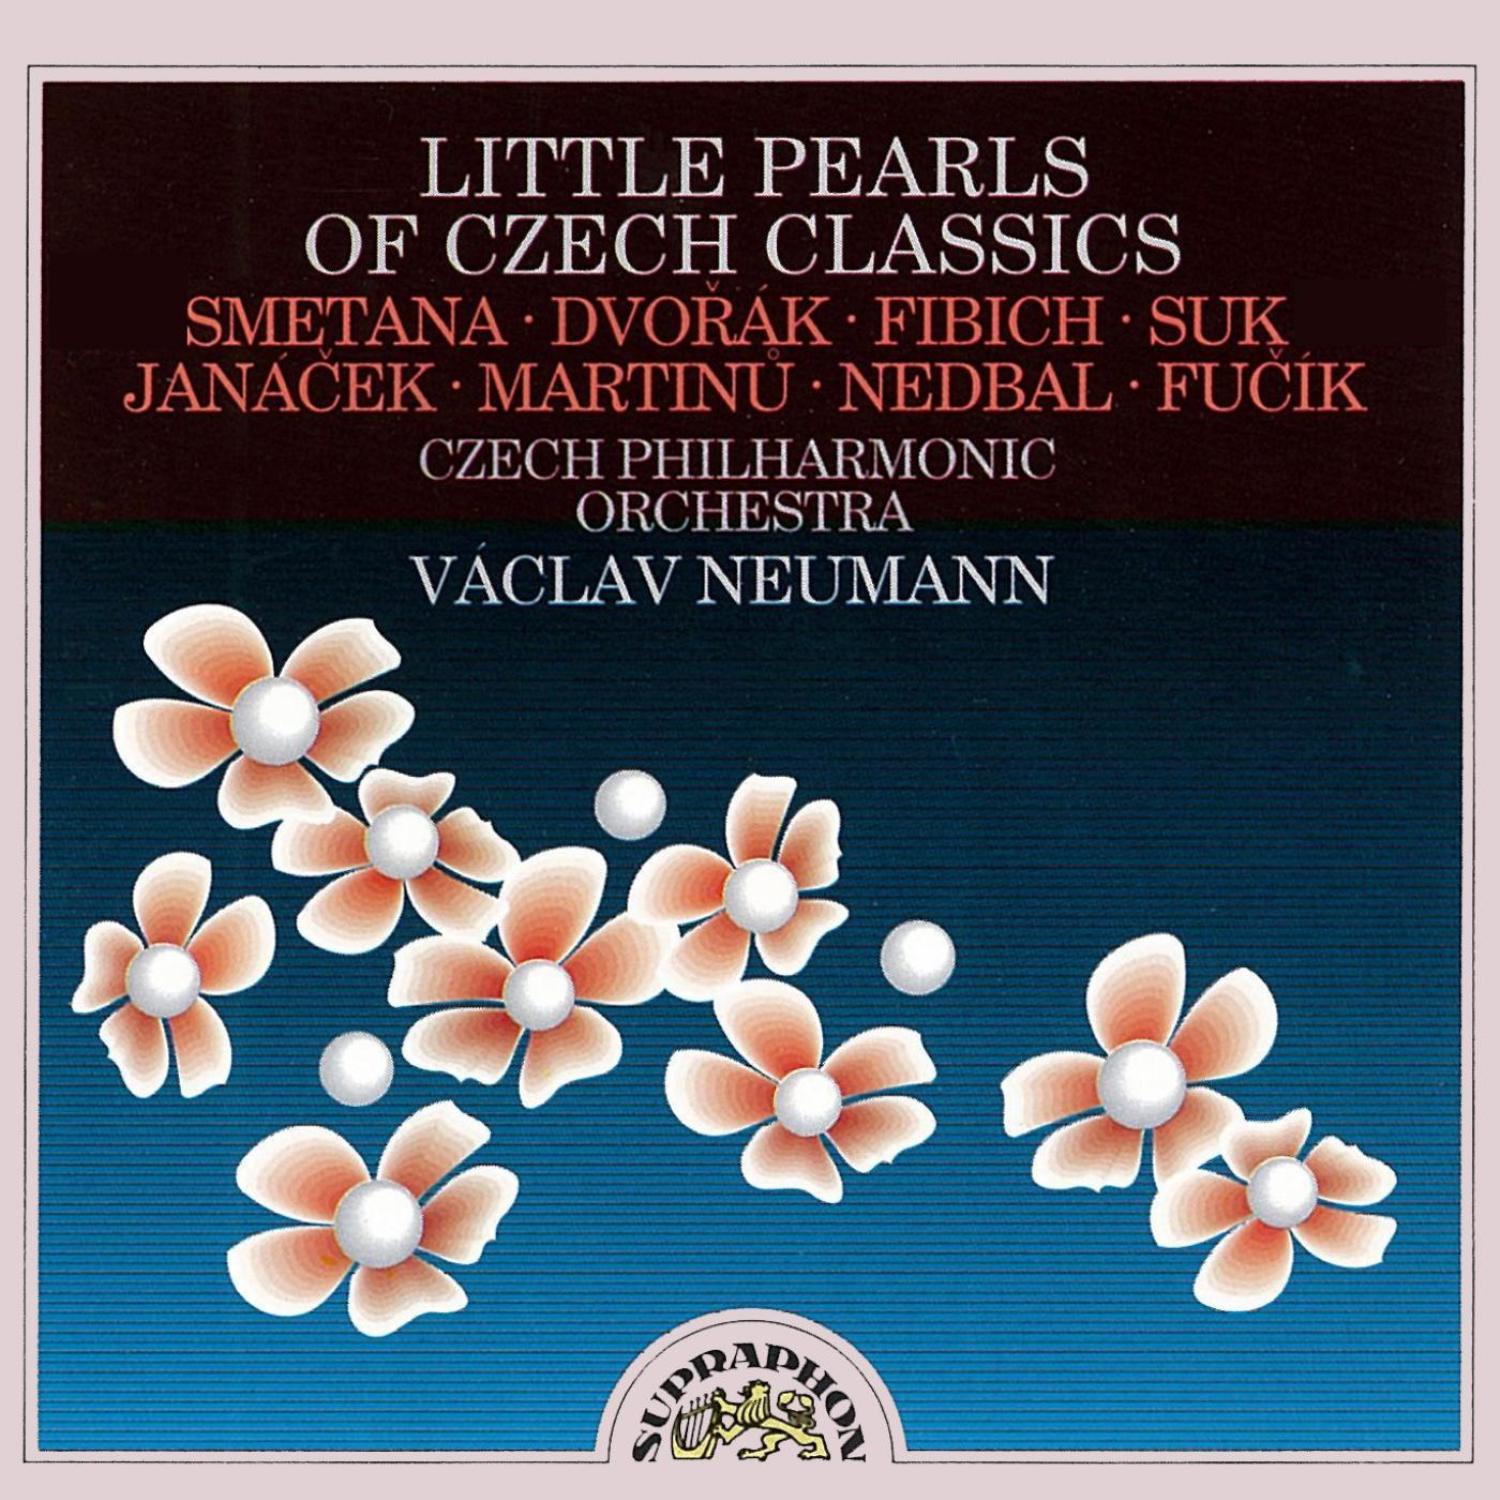 Fui k, Dvoa k, Fibich, Martin : Little Pearls of Czech classics